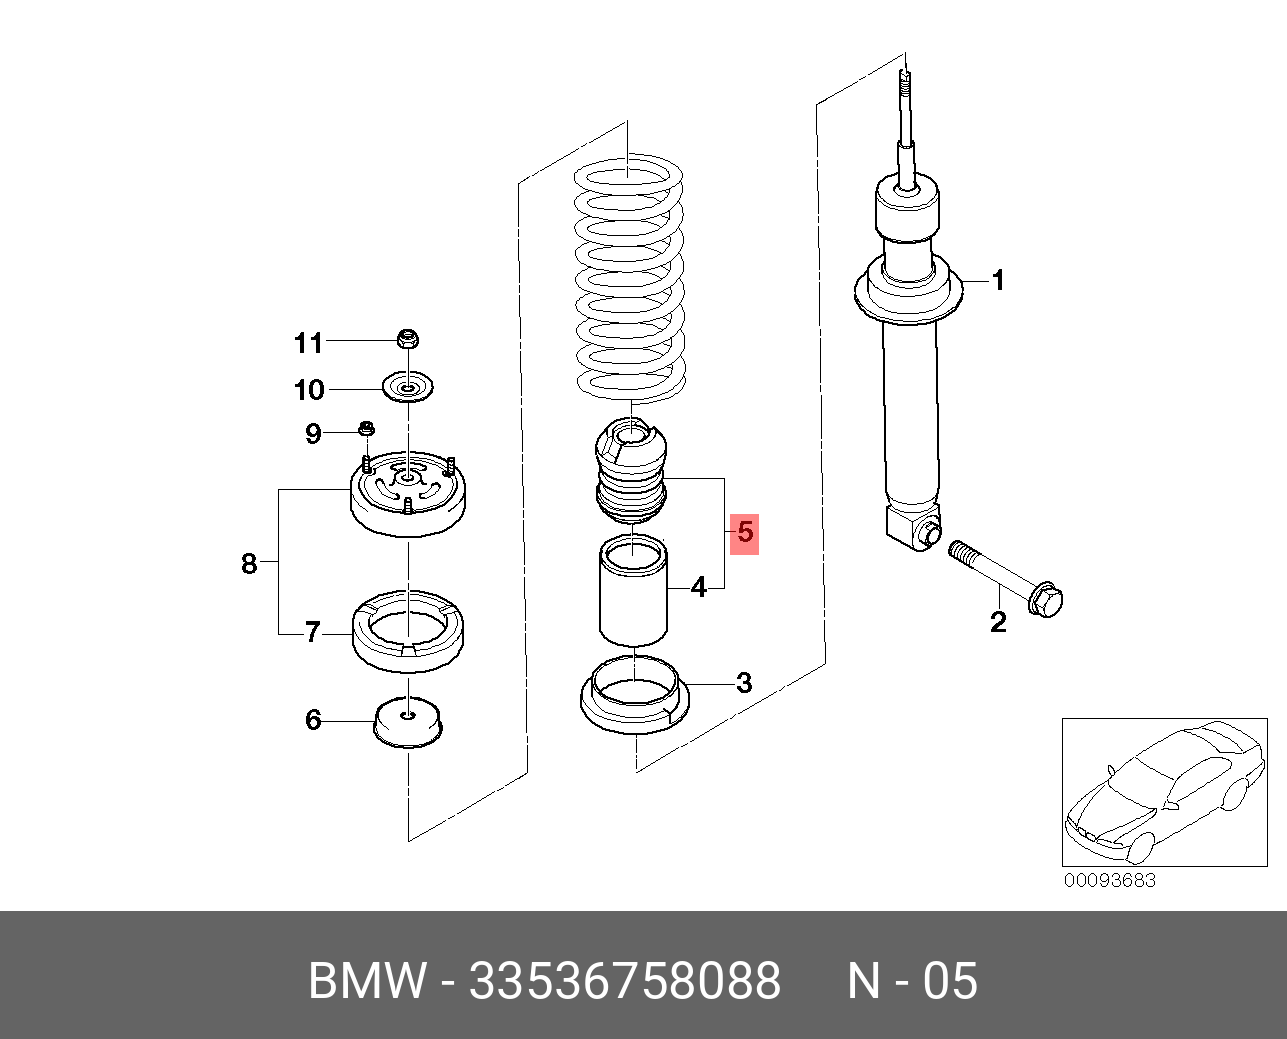 33 52 5 2 3 3. Схема переднего амортизатора BMW e60. Схема переднего амортизатора BMW e34. Отбойник амортизатора BMW е60. Схема задней амартизаторов бив е 46.